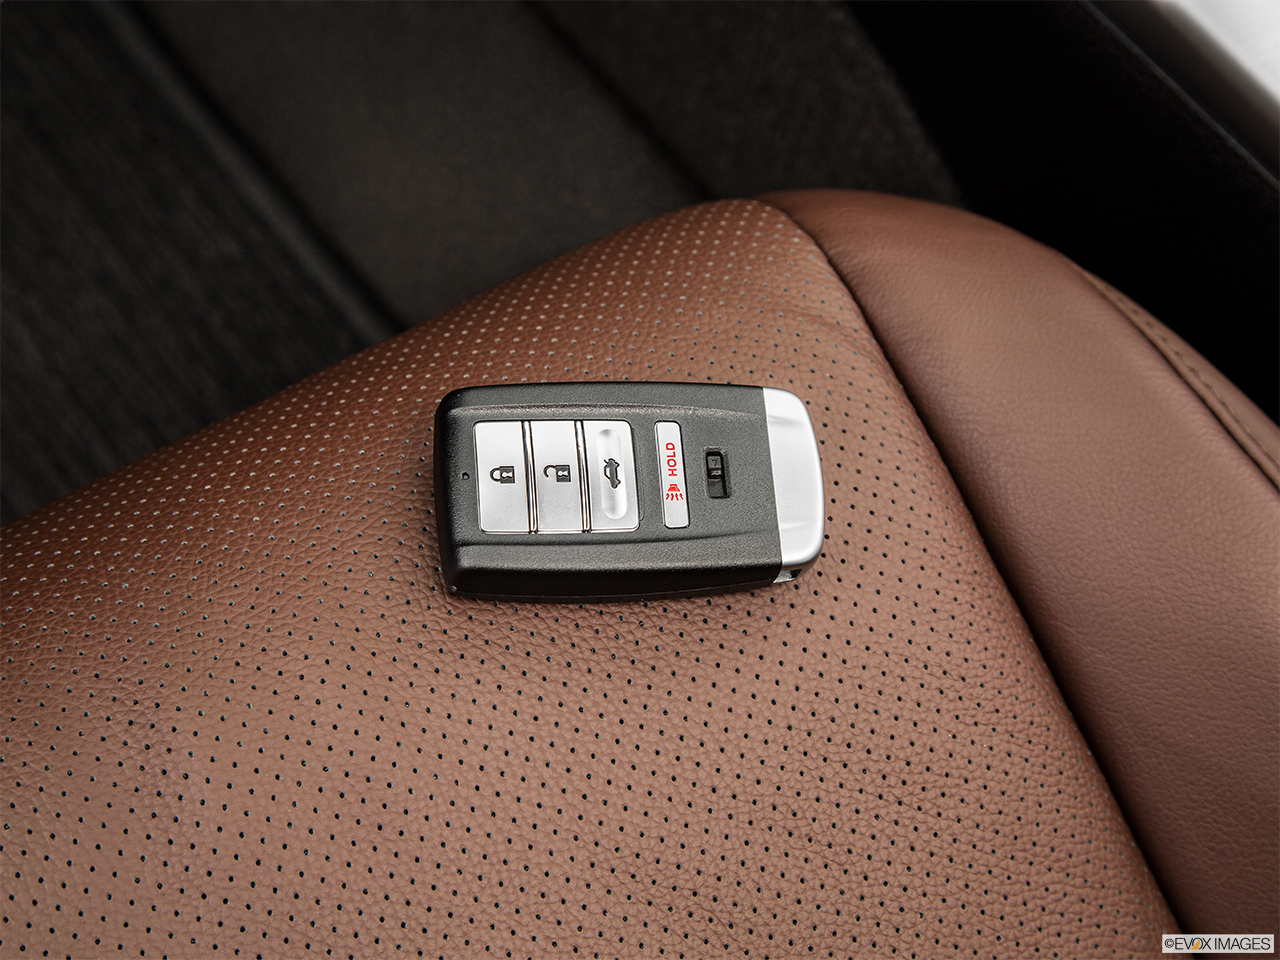 2015 Acura TLX 3.5 V-6 9-AT SH-AWD Key fob on driver's seat. 